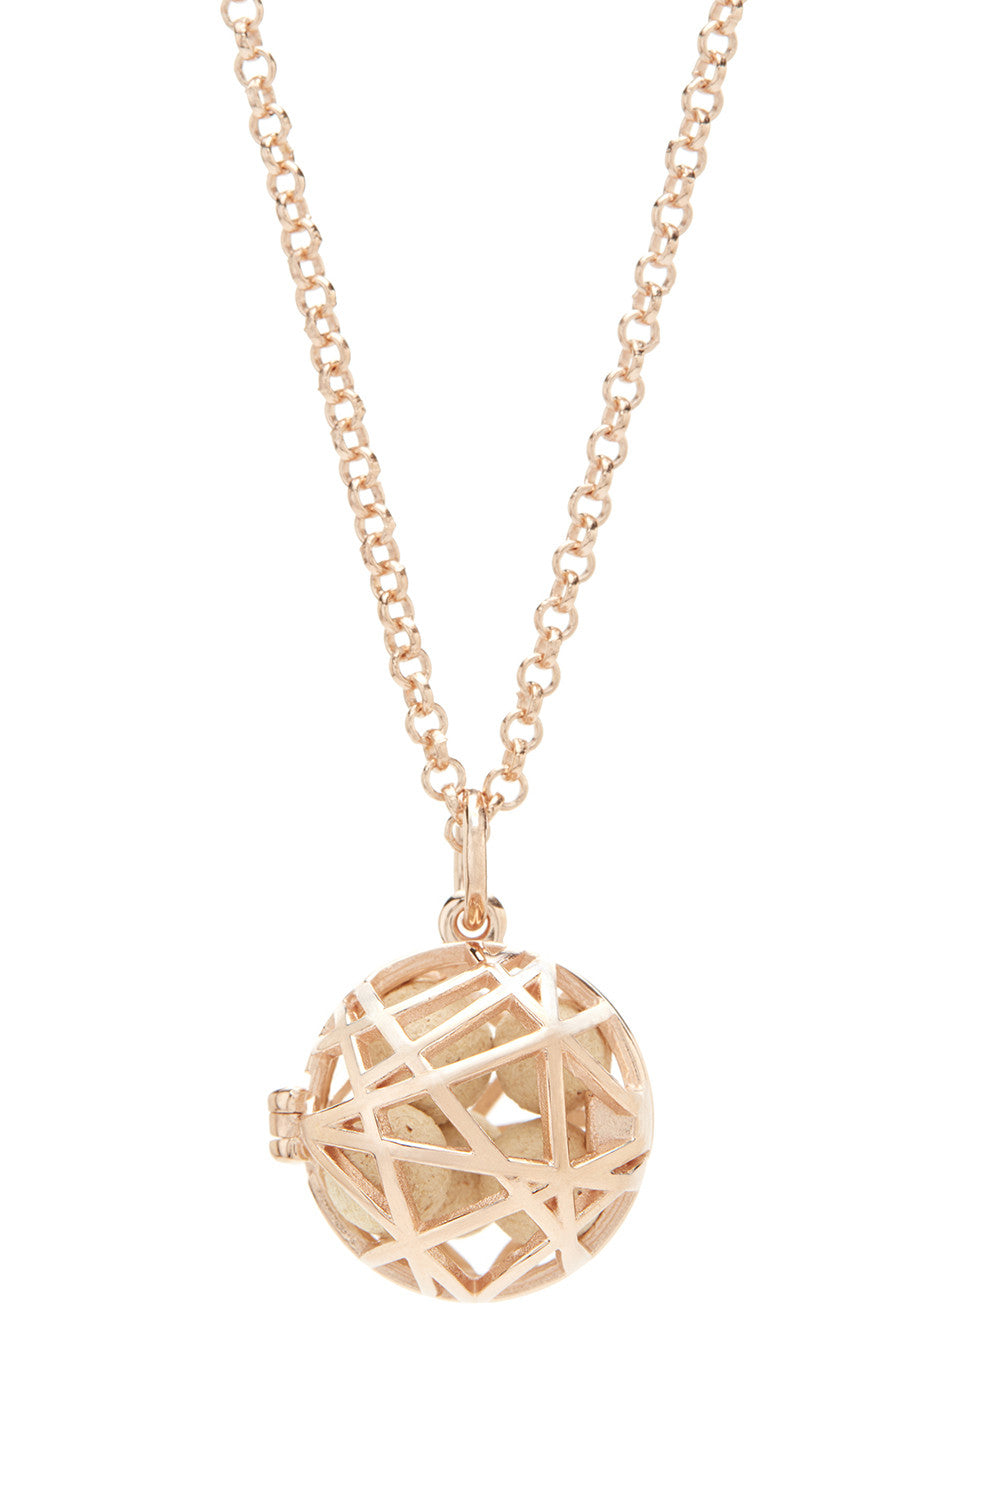 Nest Necklace - Rose Gold